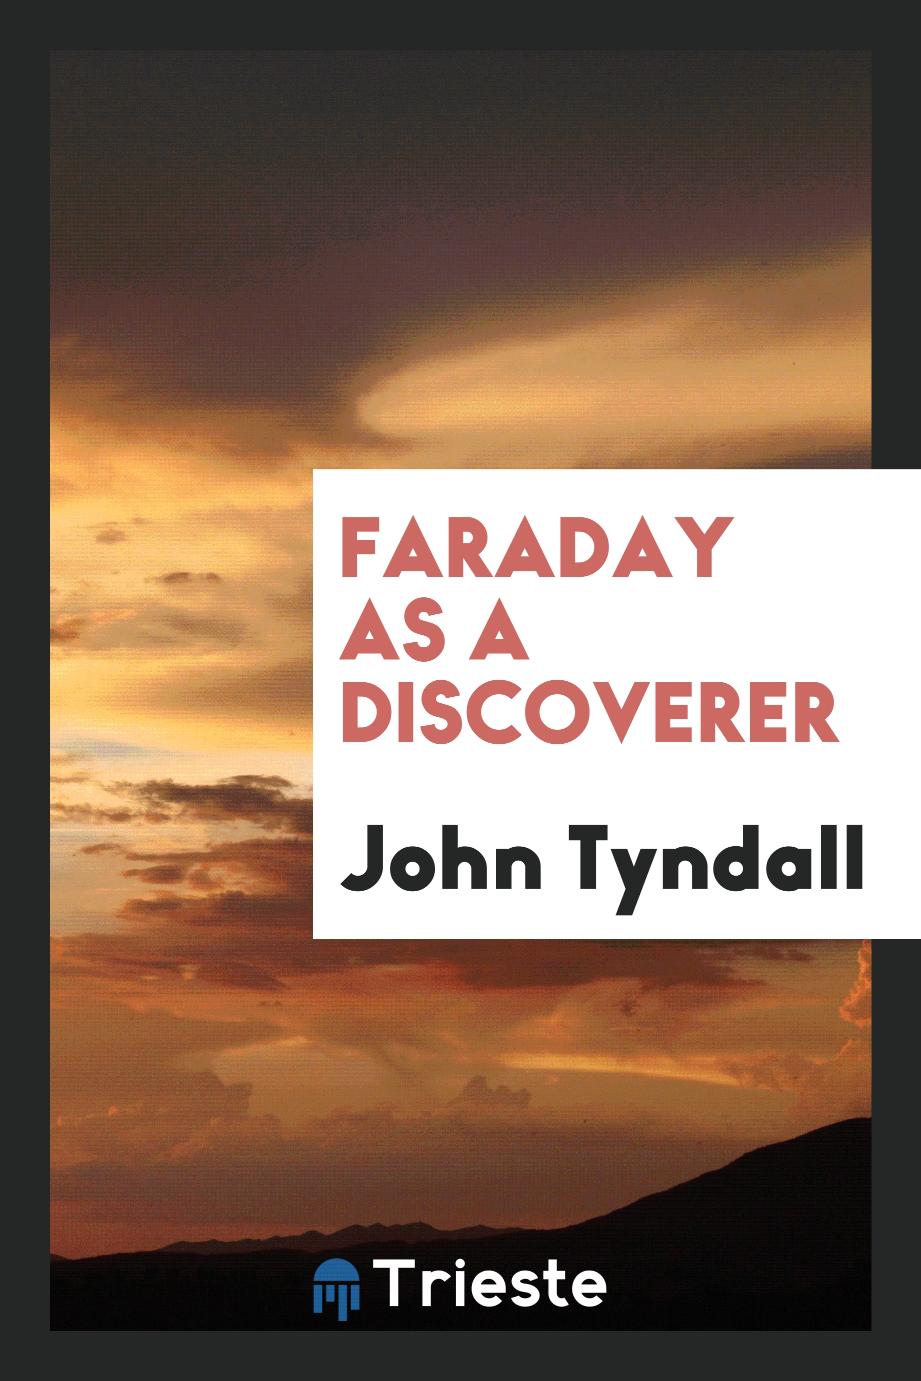 Faraday as a discoverer